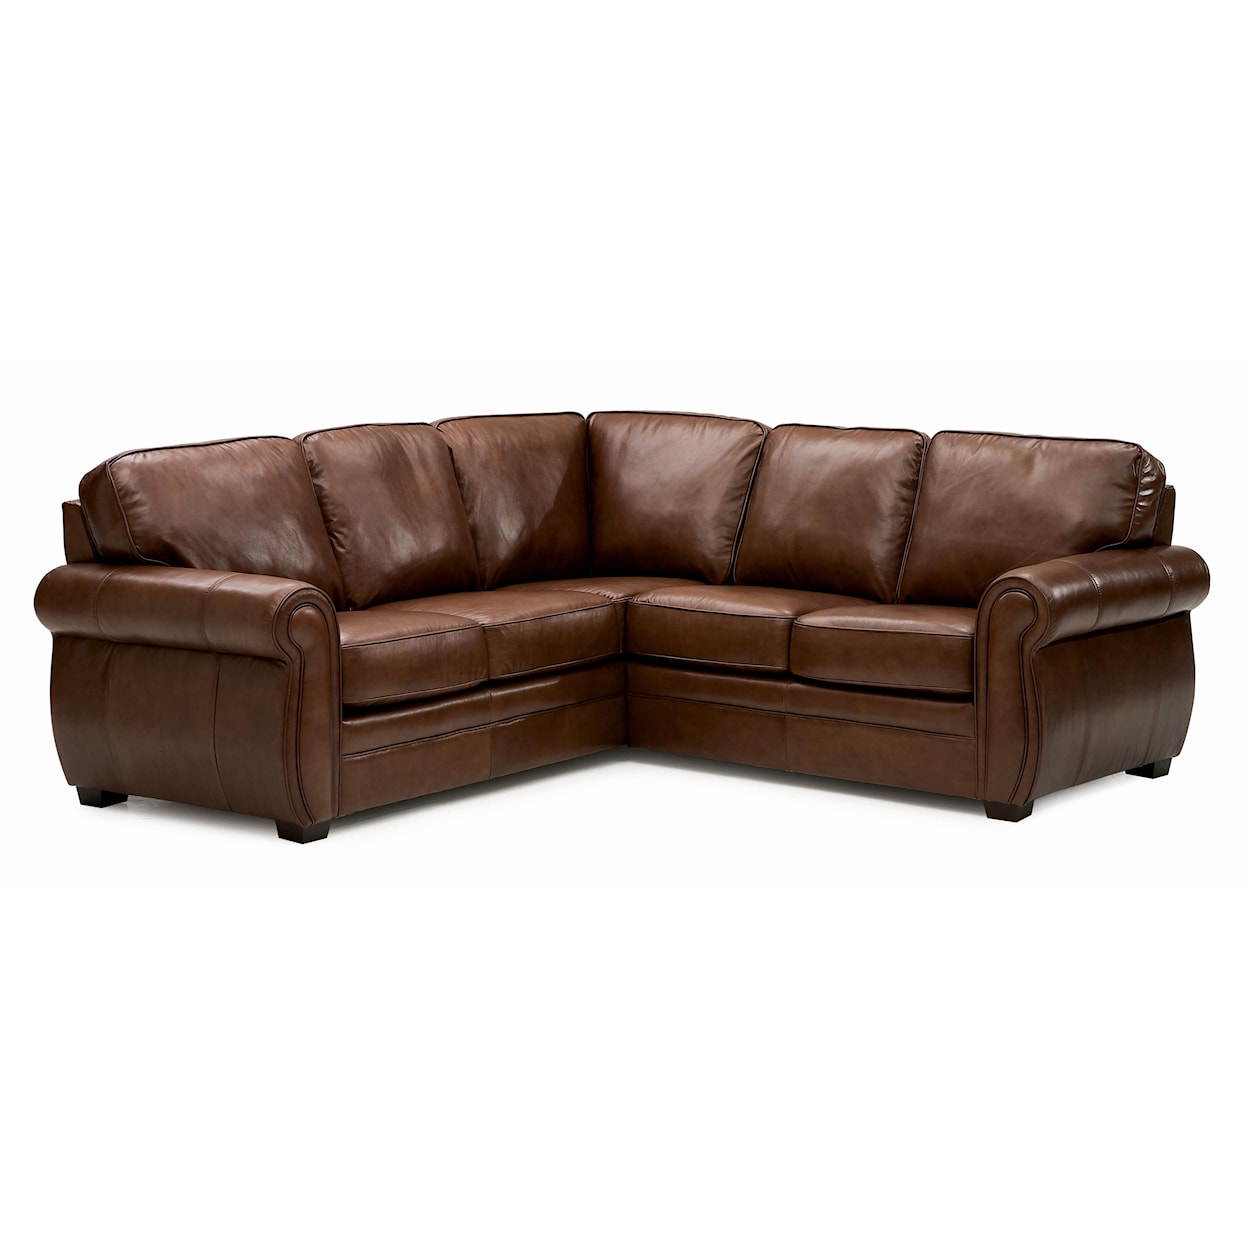 Palliser Viceroy70492 Sectional Sofa